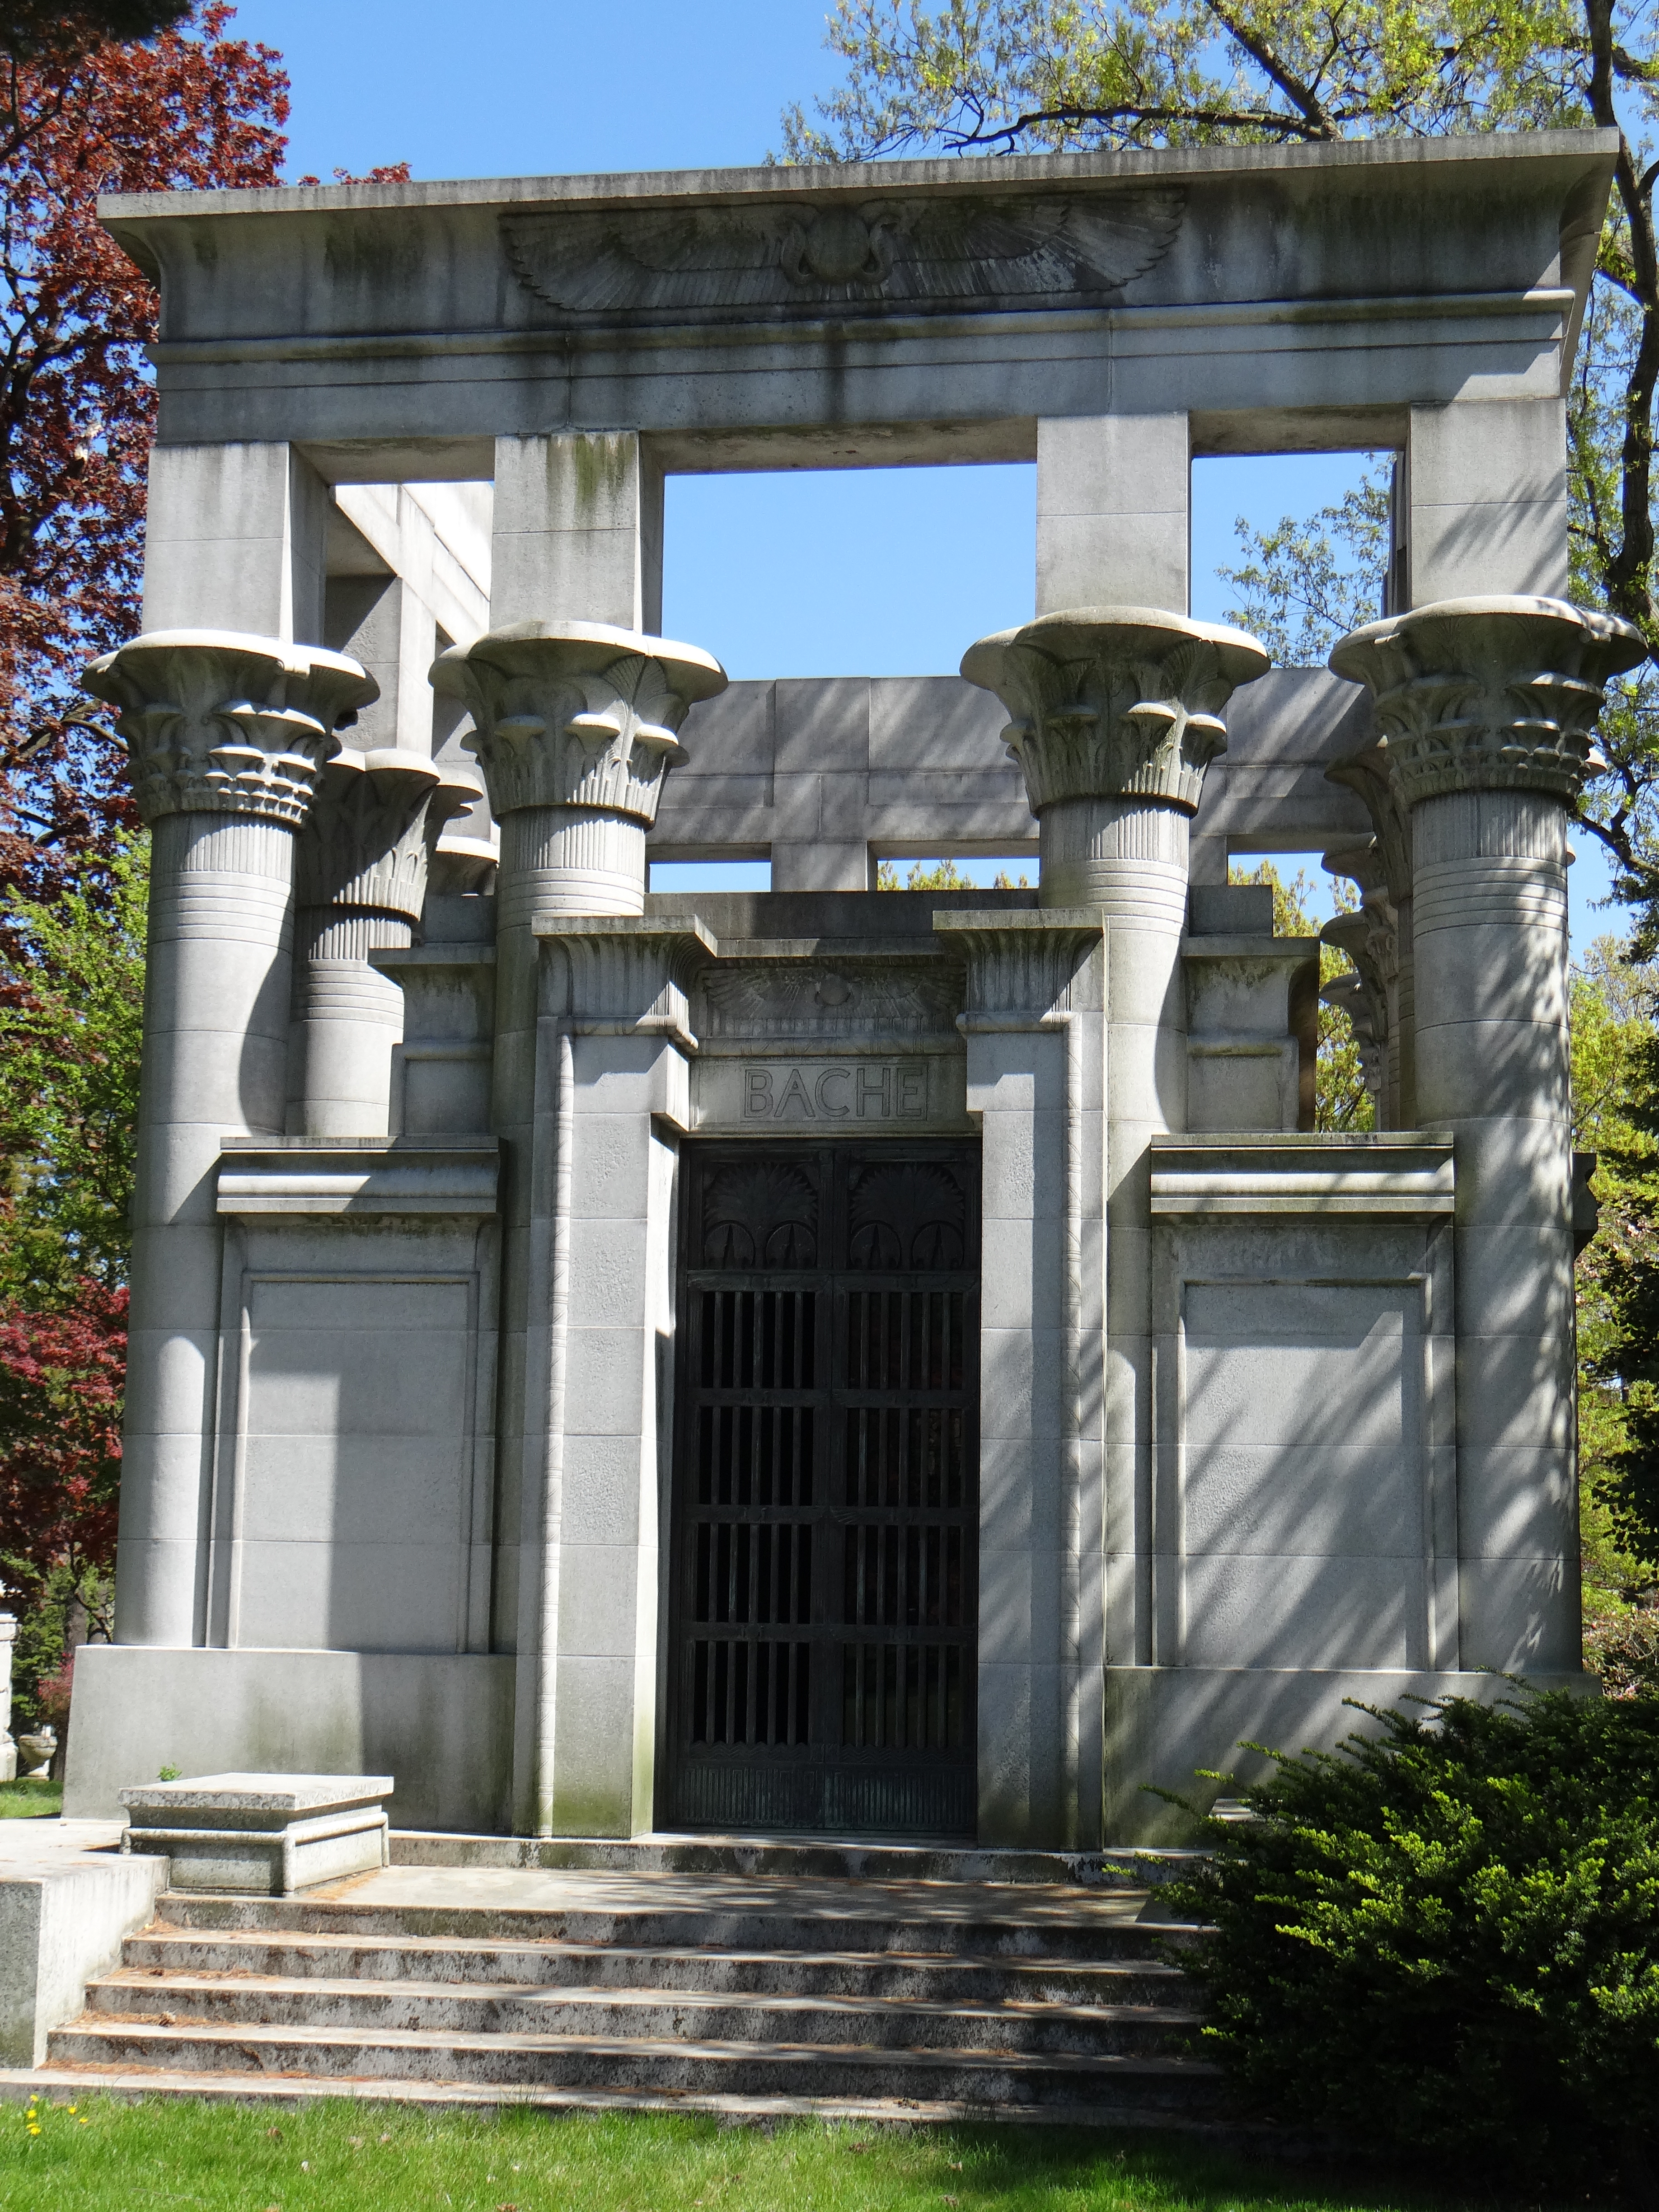 Bache mausoleum